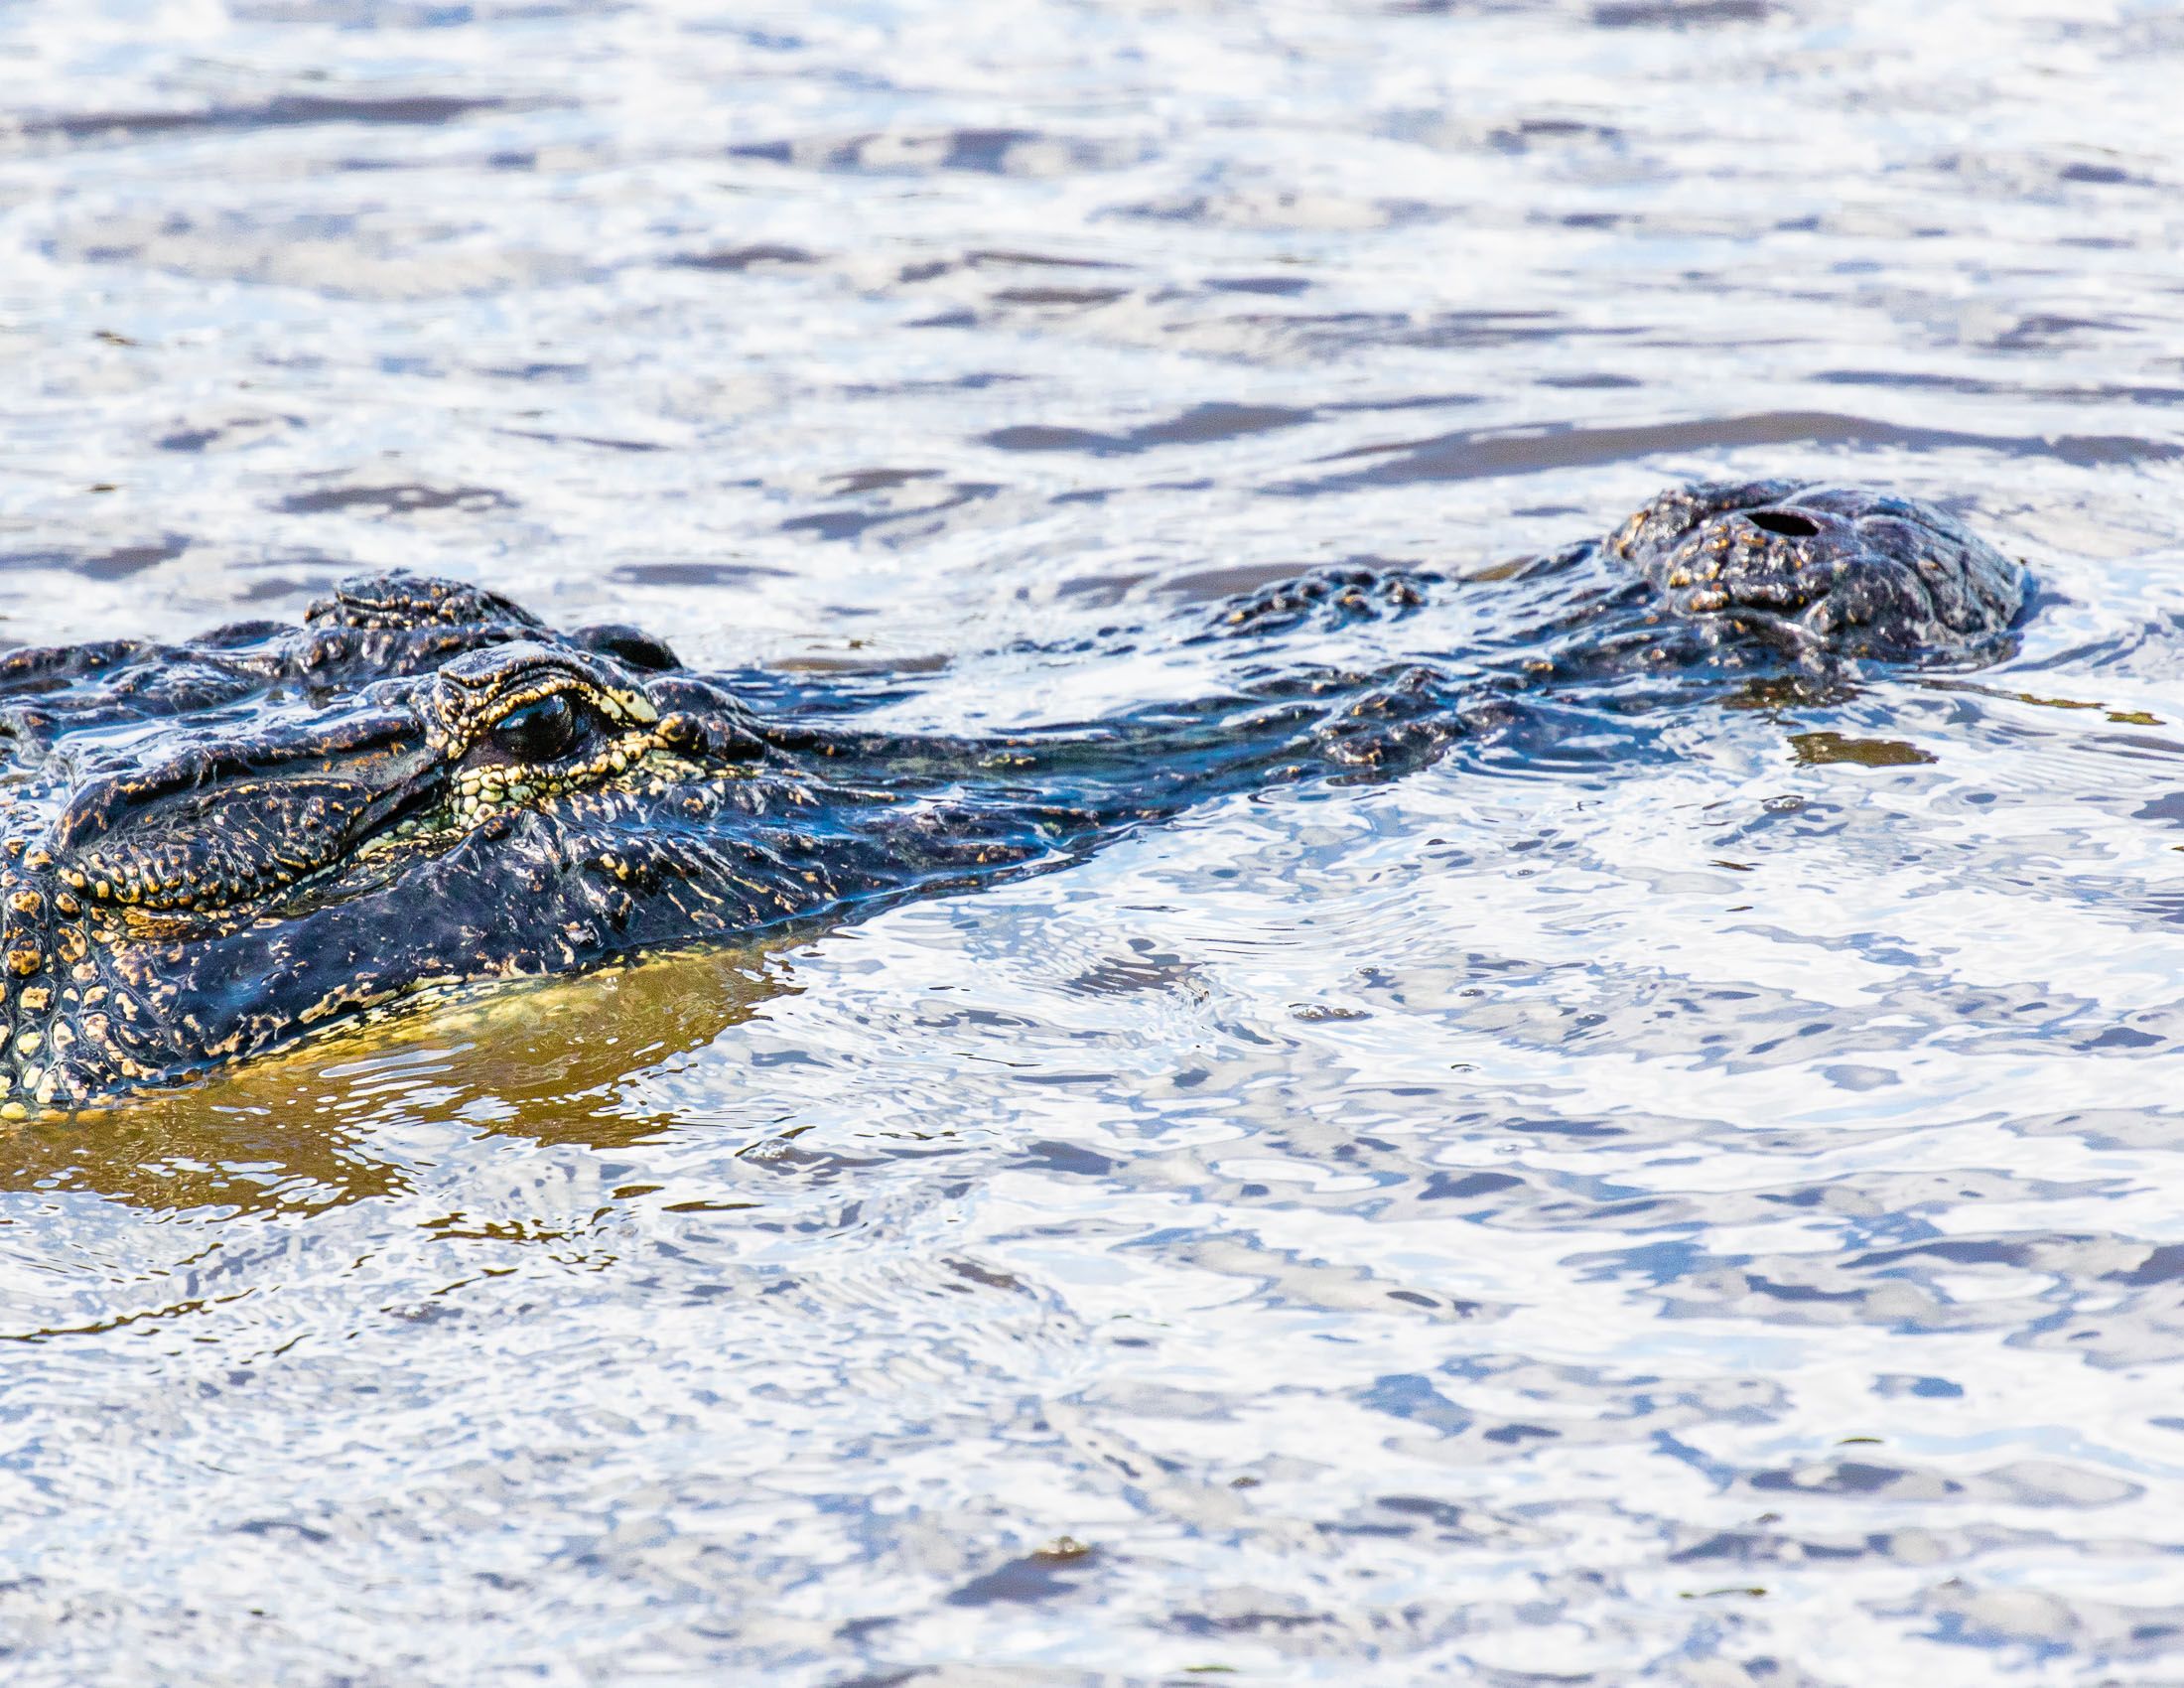 Alligators of Ace Basin, South Carolina-5.jpg